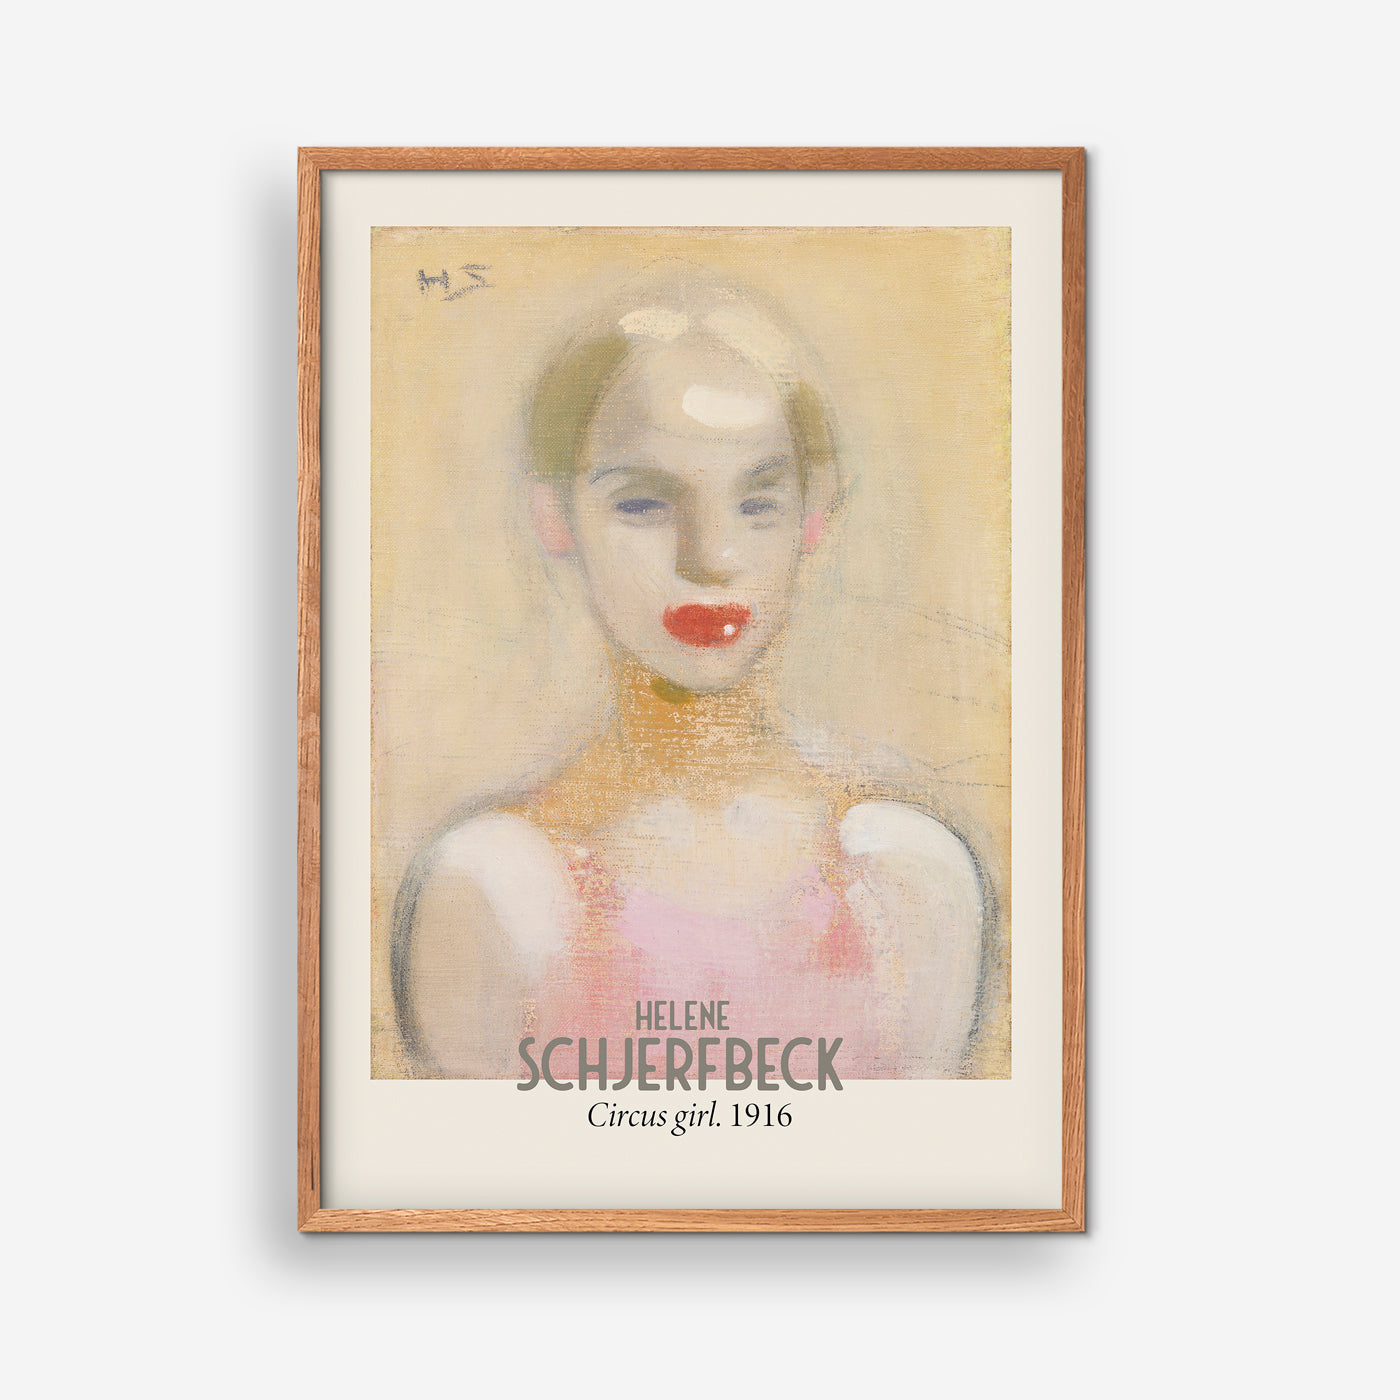 Helene Schjerfbeck - Circus girl 1916